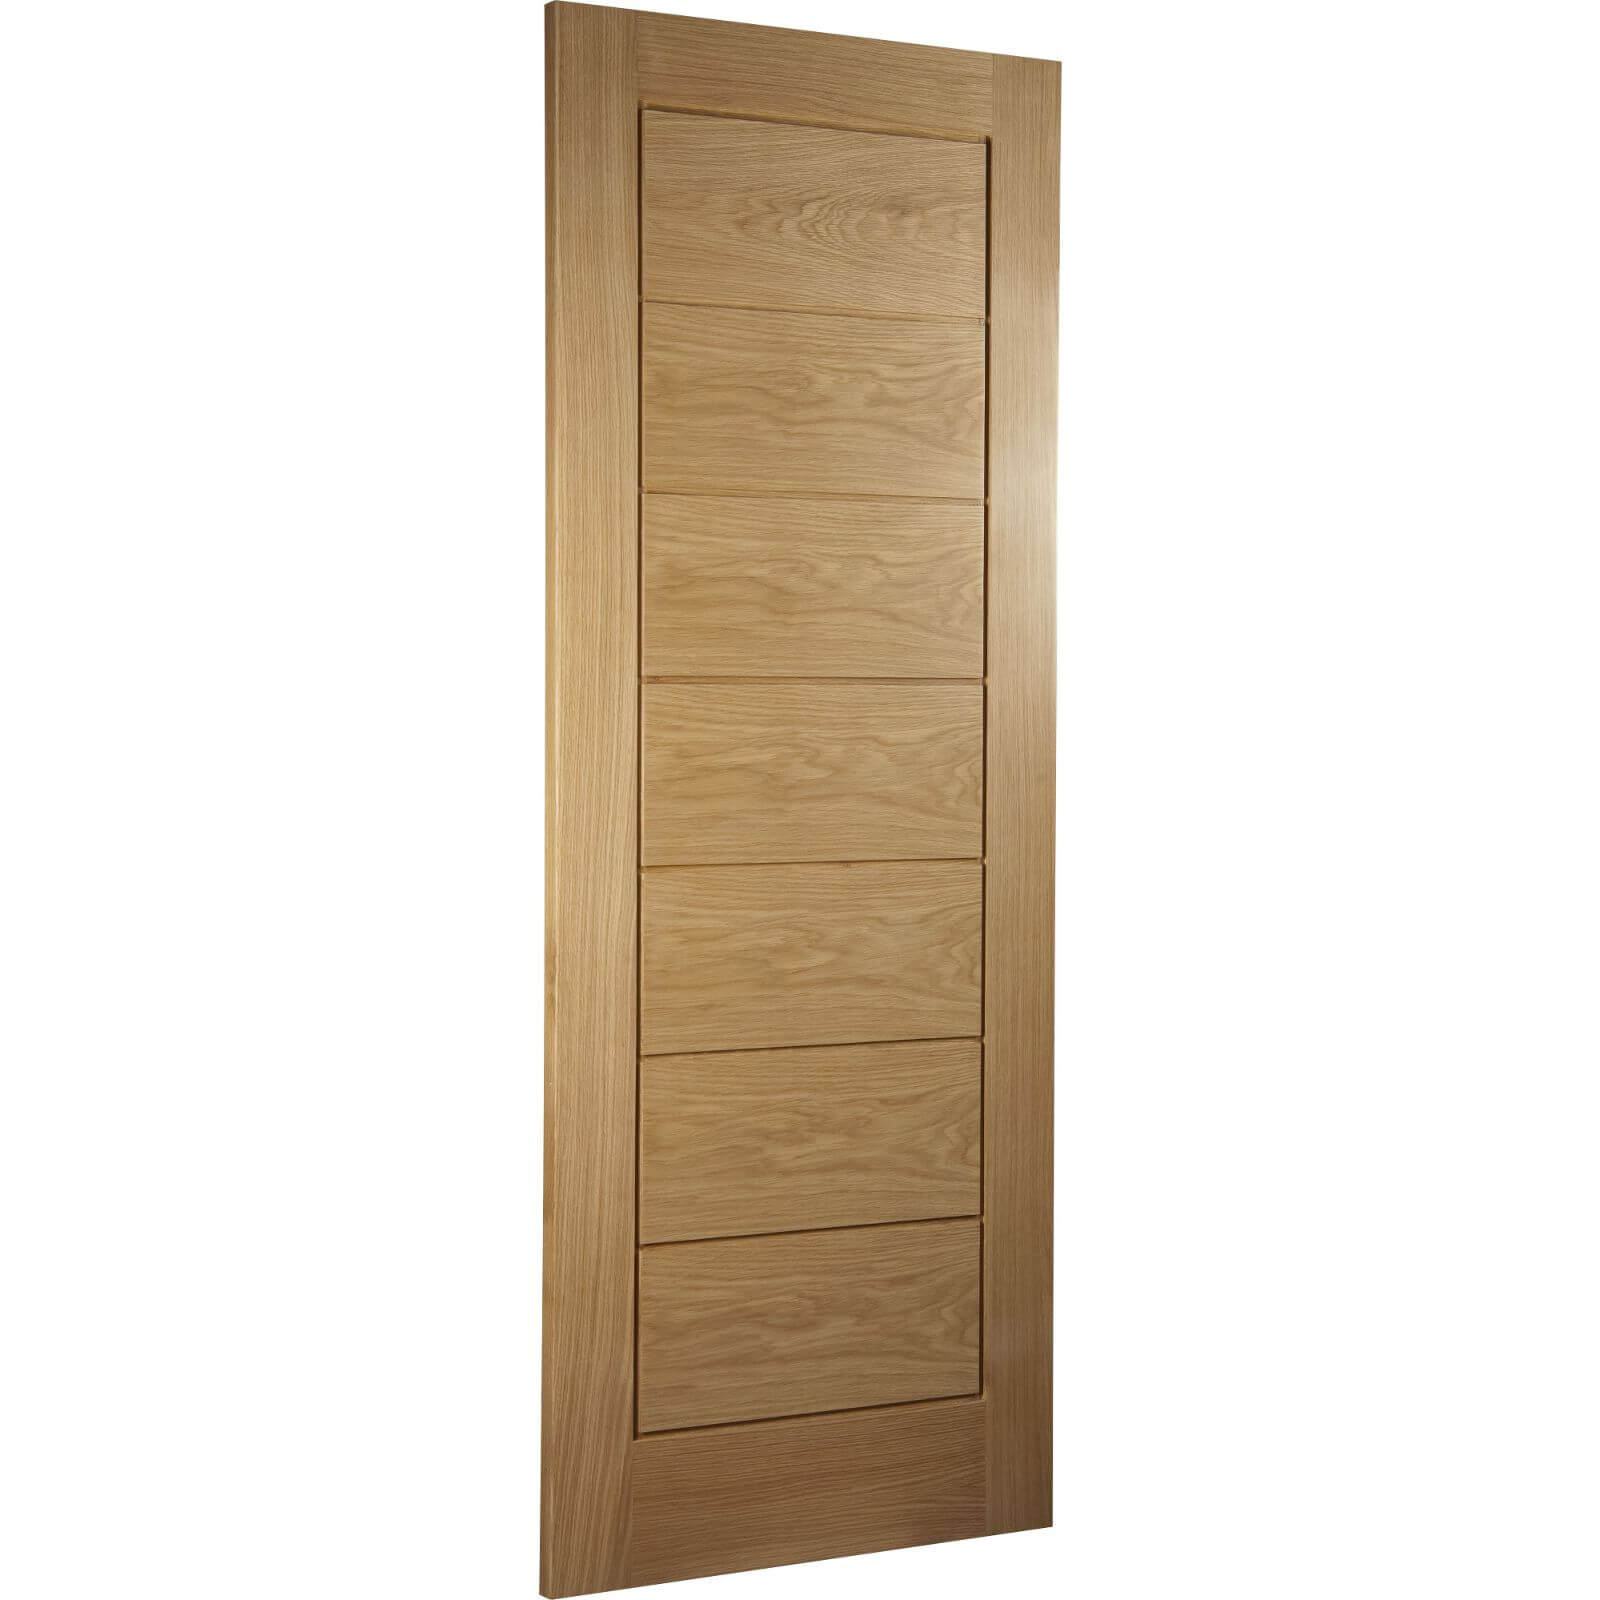 Horizontal 7 Panel White Oak Veneer Internal Door - 826mm Wide